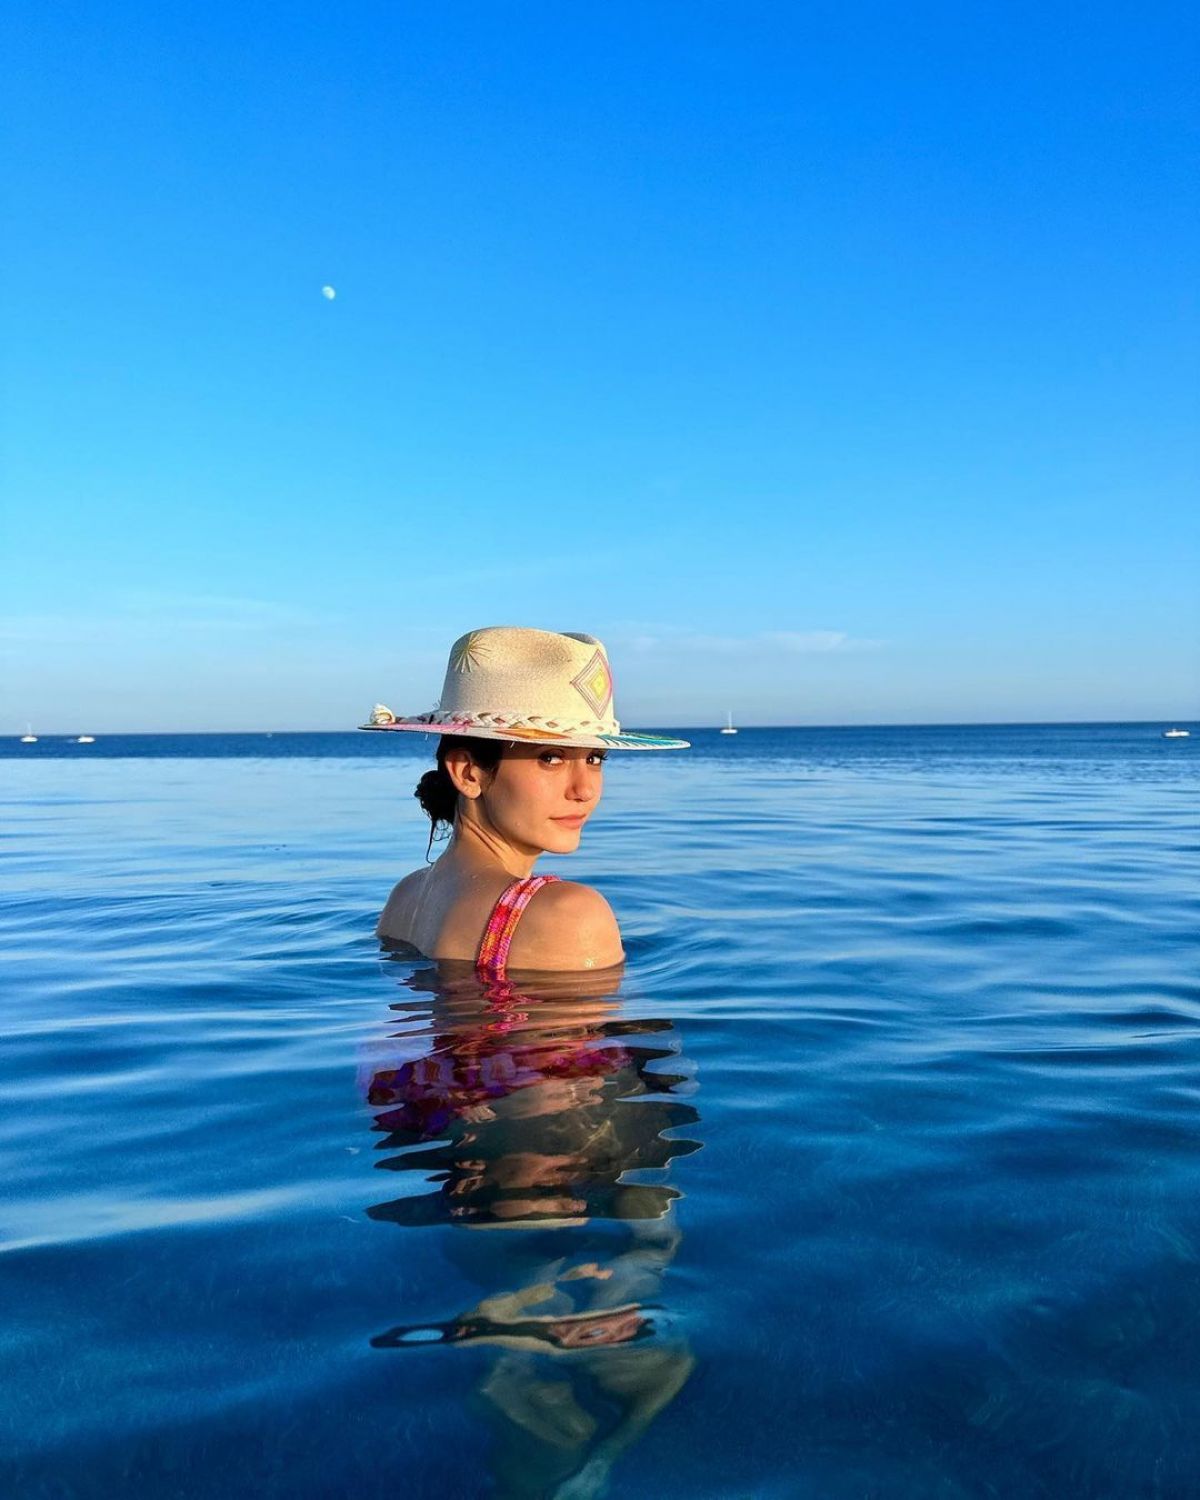 Nina Dobrev Shares Stunning Instagram Photos